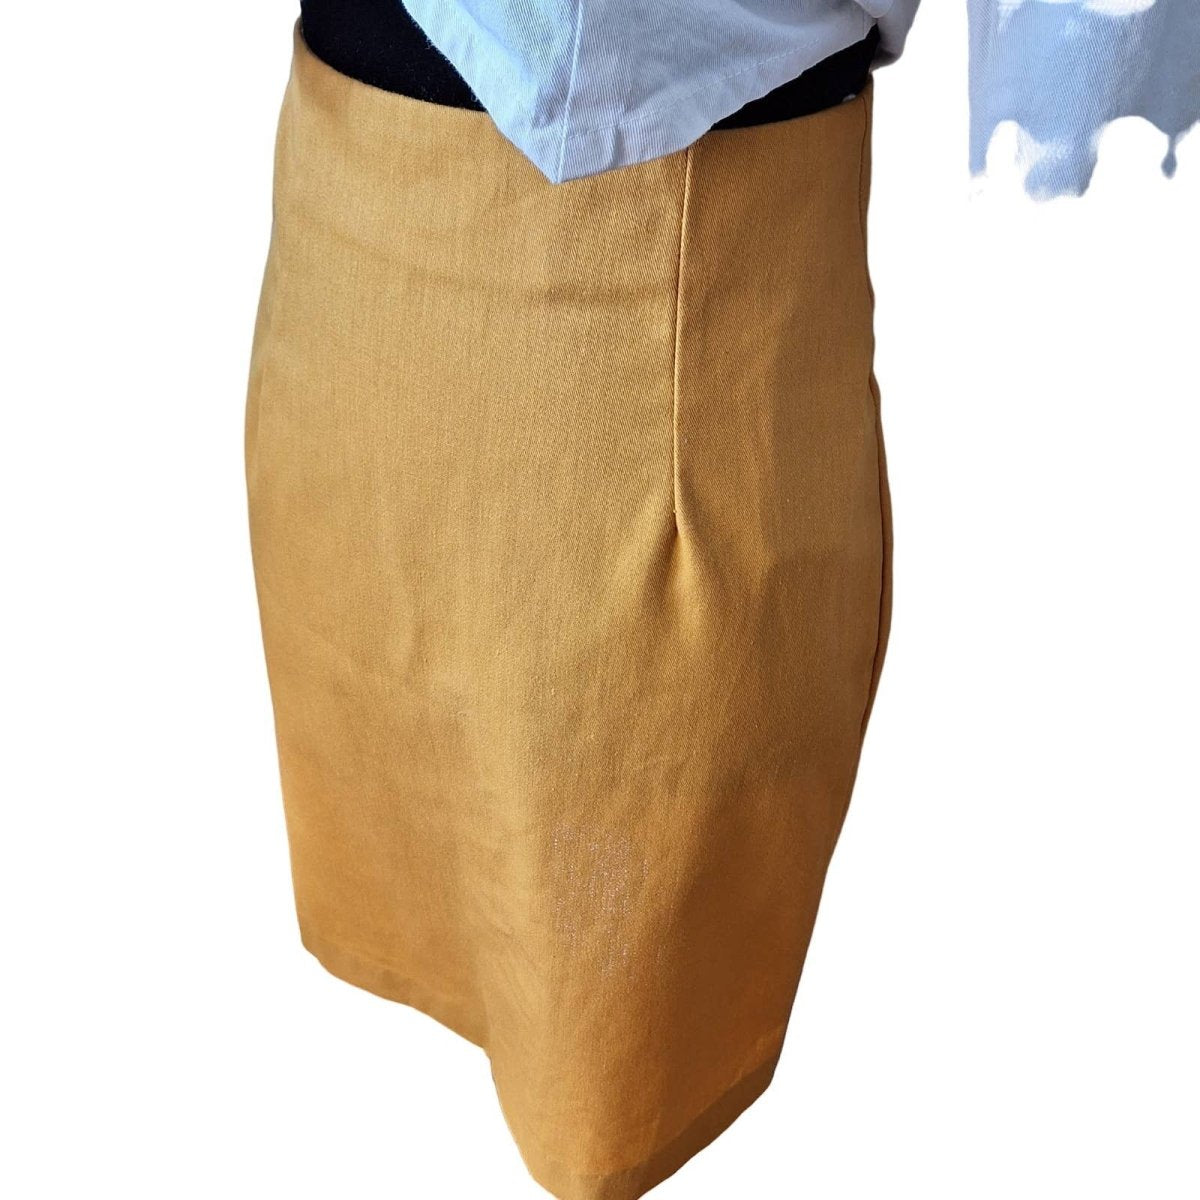 Vintage 80s Mustard Yellow High Waist Mini Pencil Skirt Size XS/S Waist 25" - themallvintage The Mall Vintage